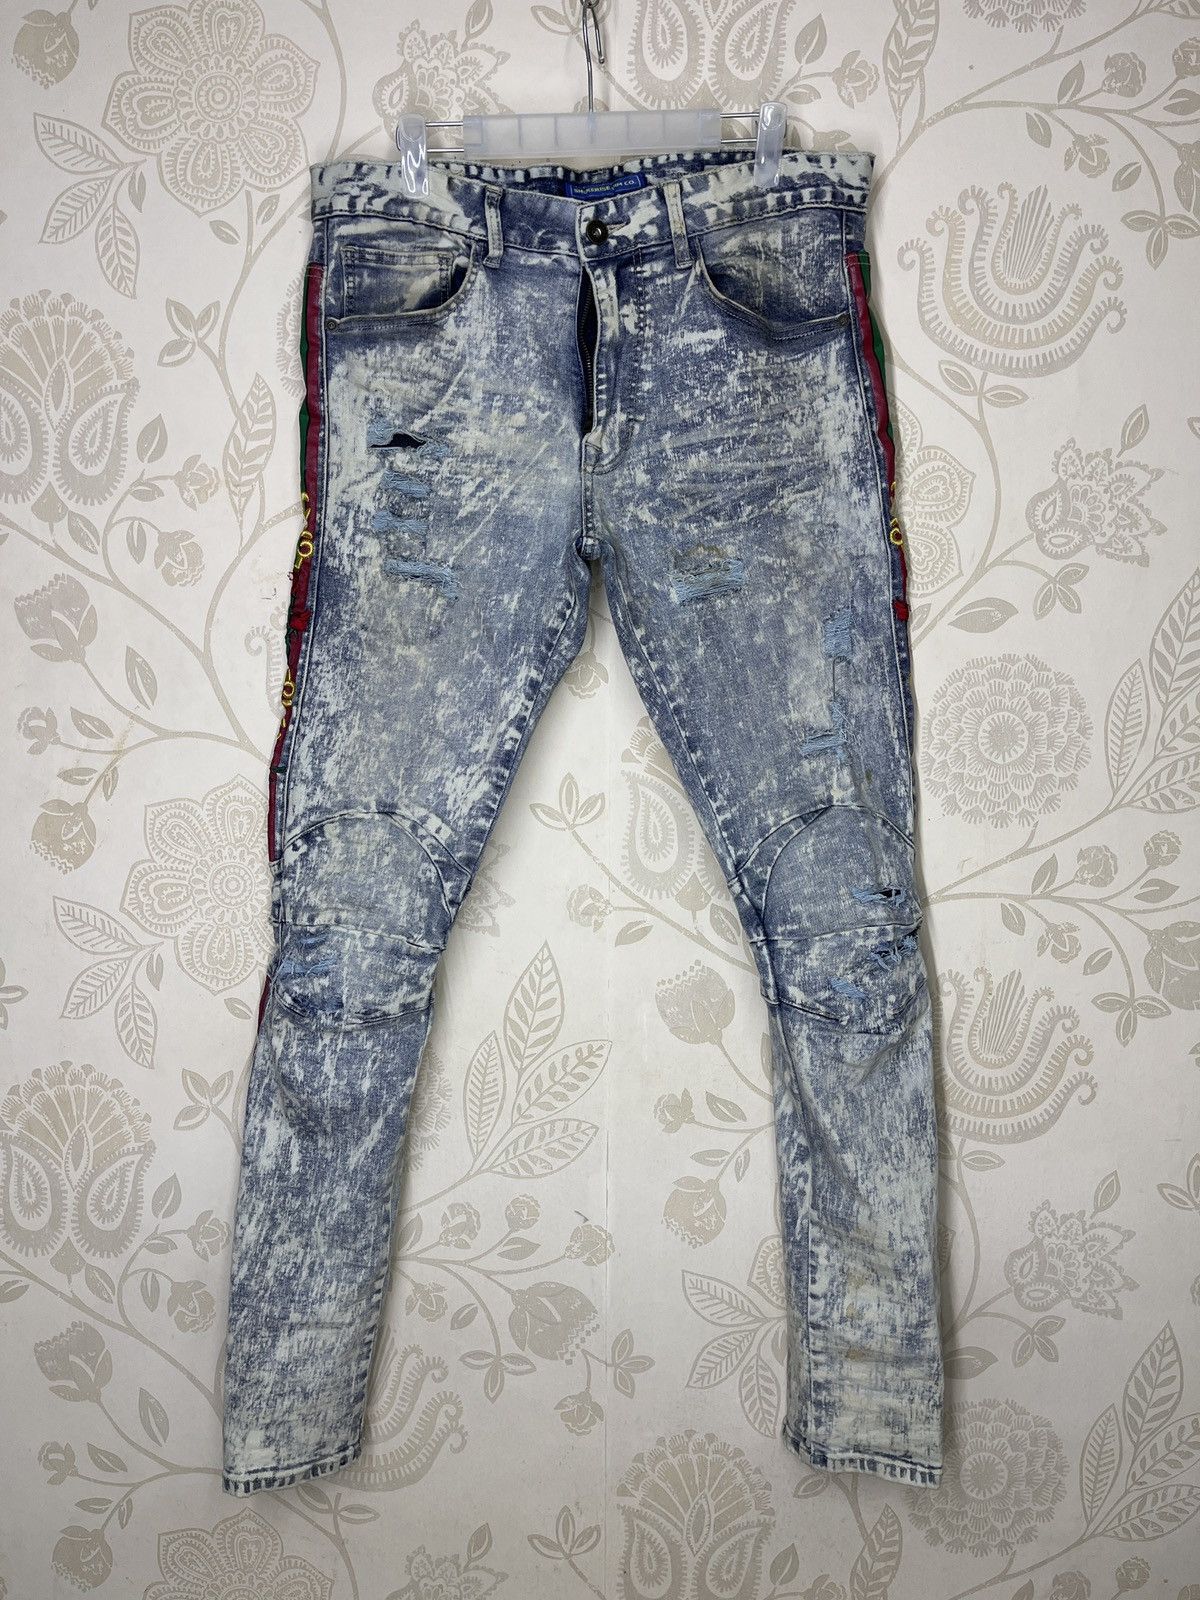 Avant Garde - Acid Wash Distressed SMOKE RISE Denim Jeans Japan - 1